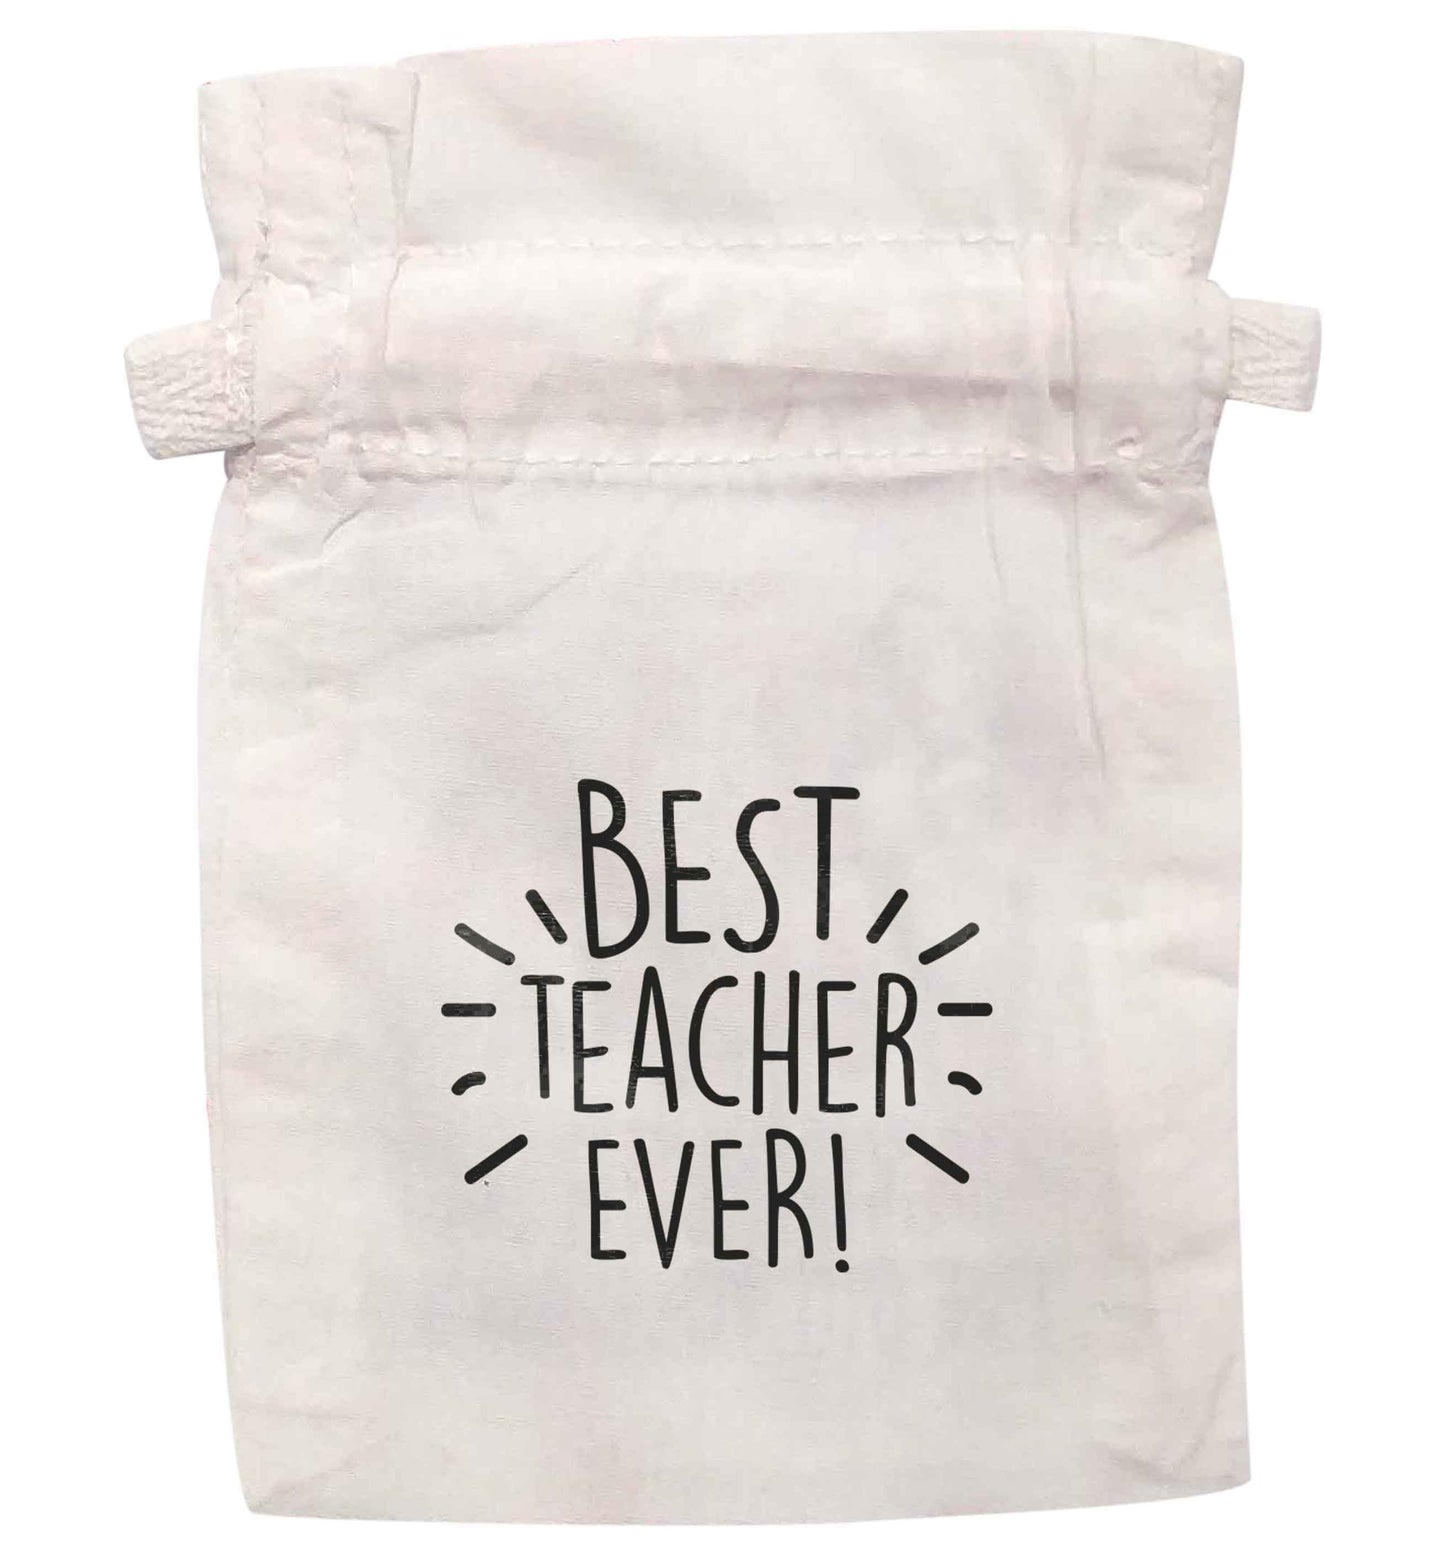 Best teacher ever! | XS - L | Pouch / Drawstring bag / Sack | Organic Cotton | Bulk discounts available!